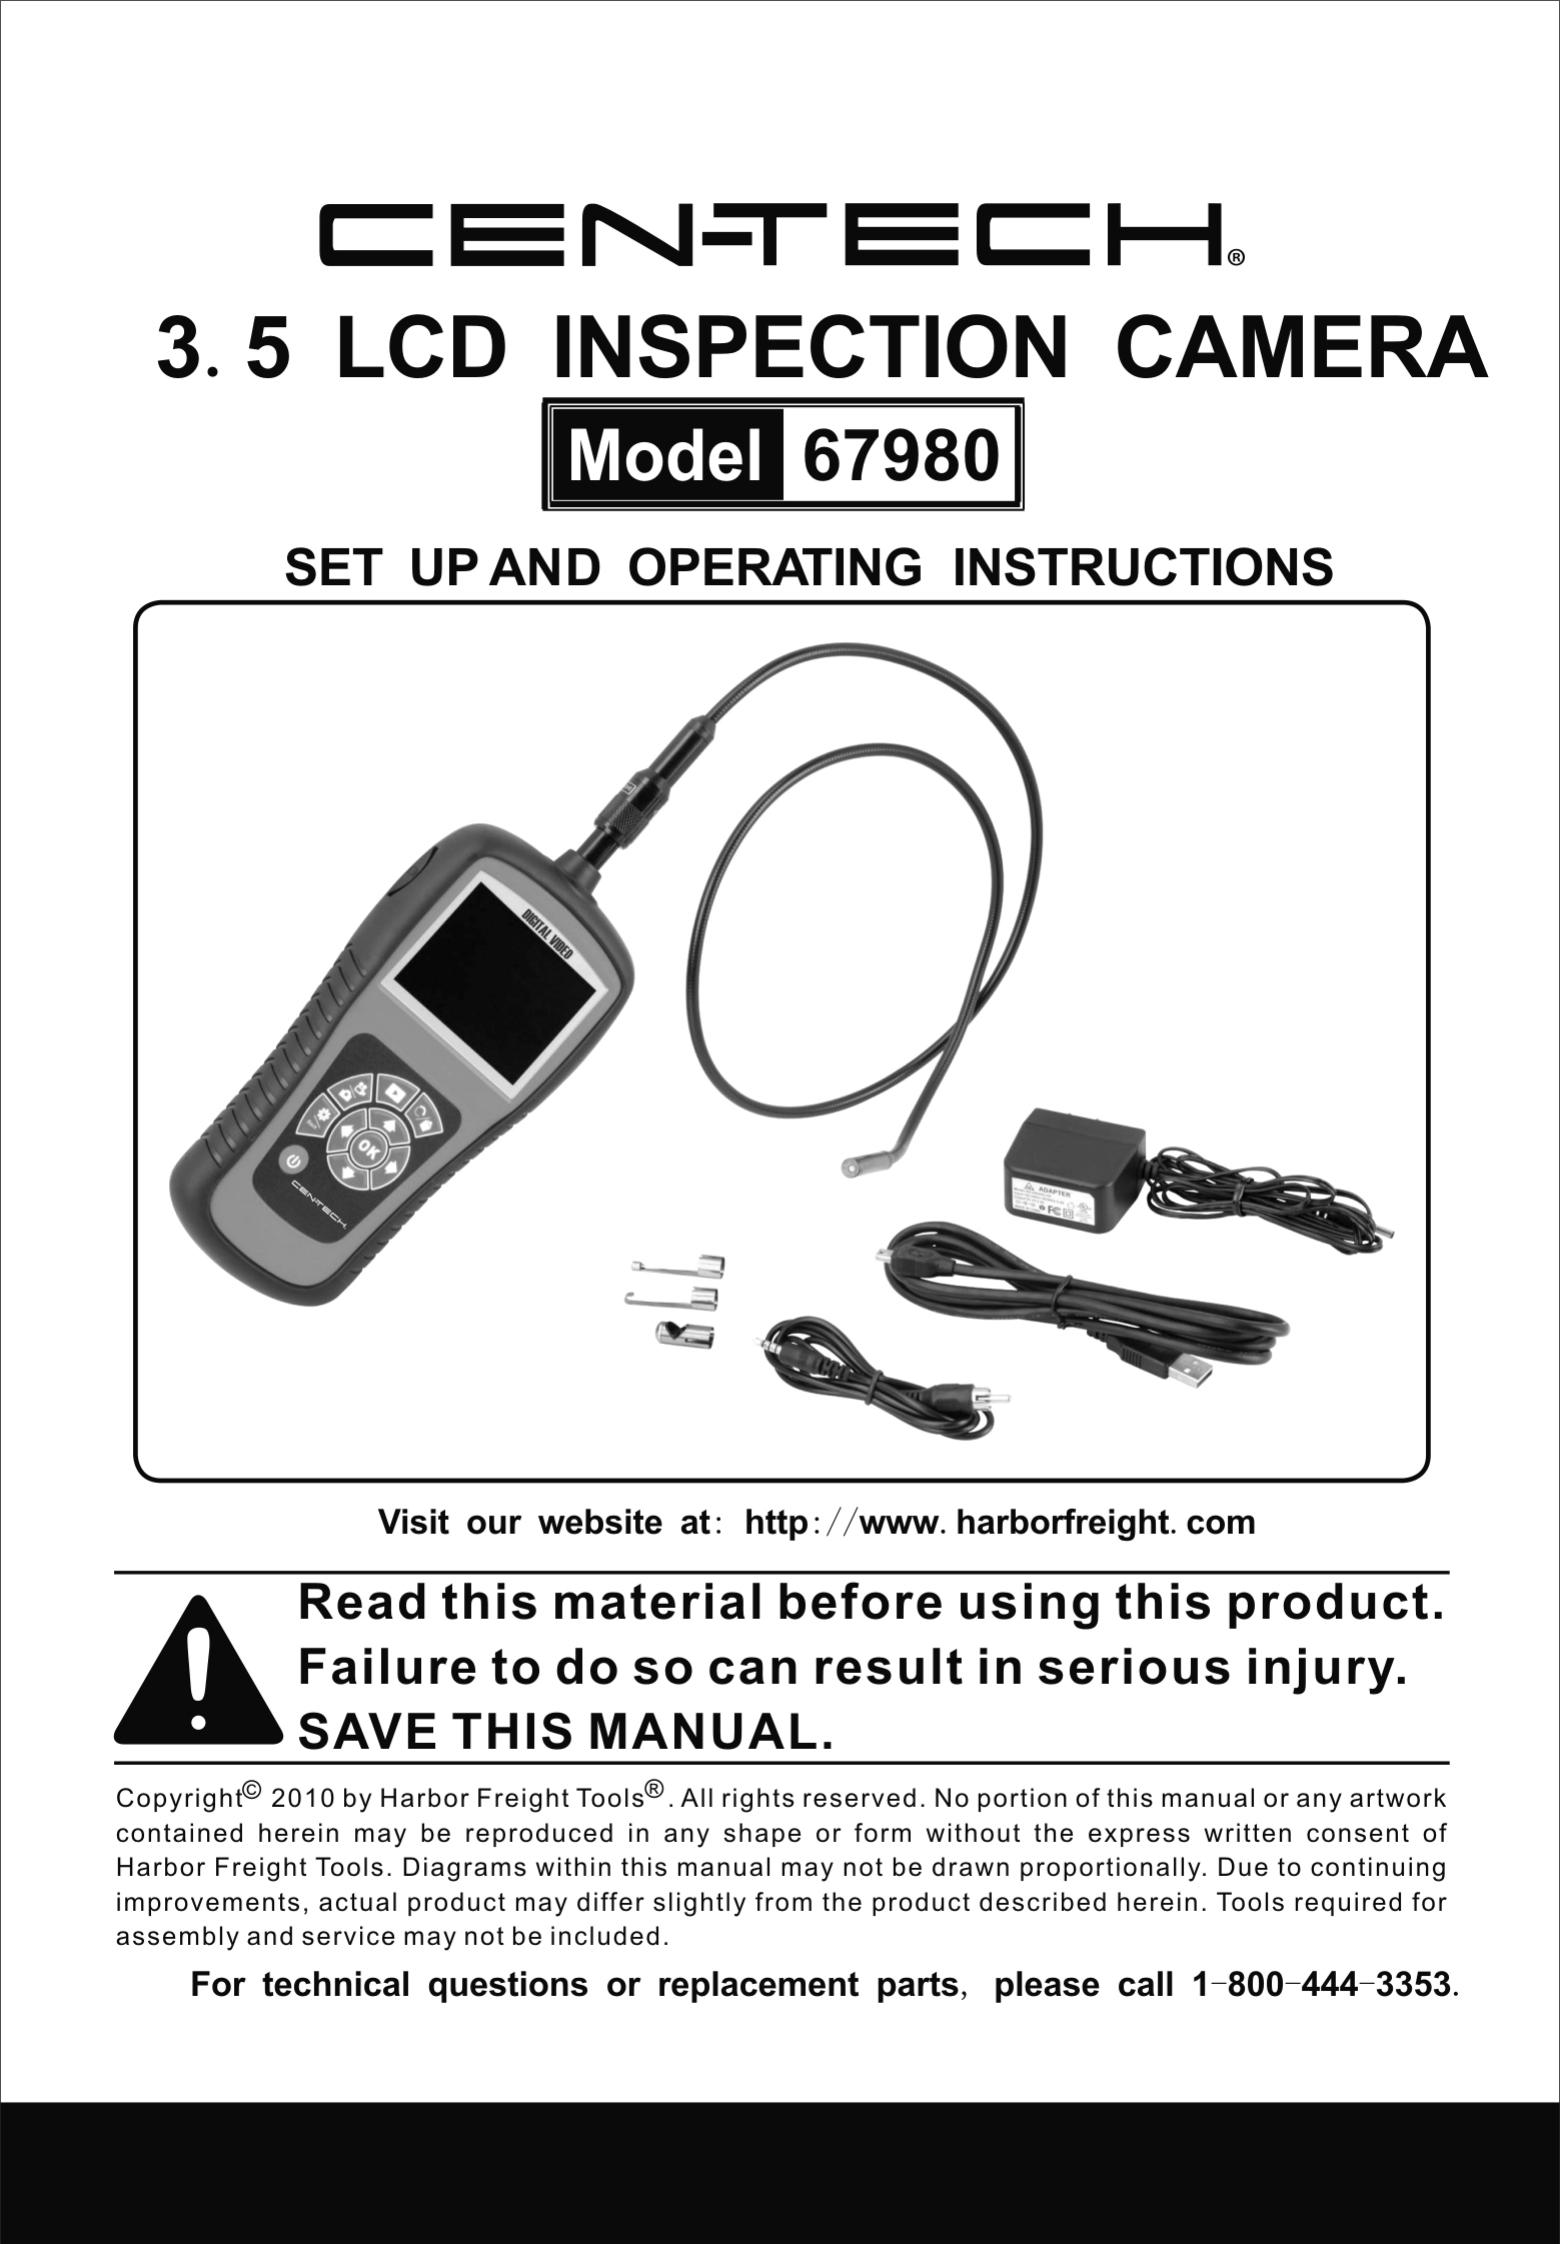 Cenix Digicom 67980 Camera Accessories User Manual